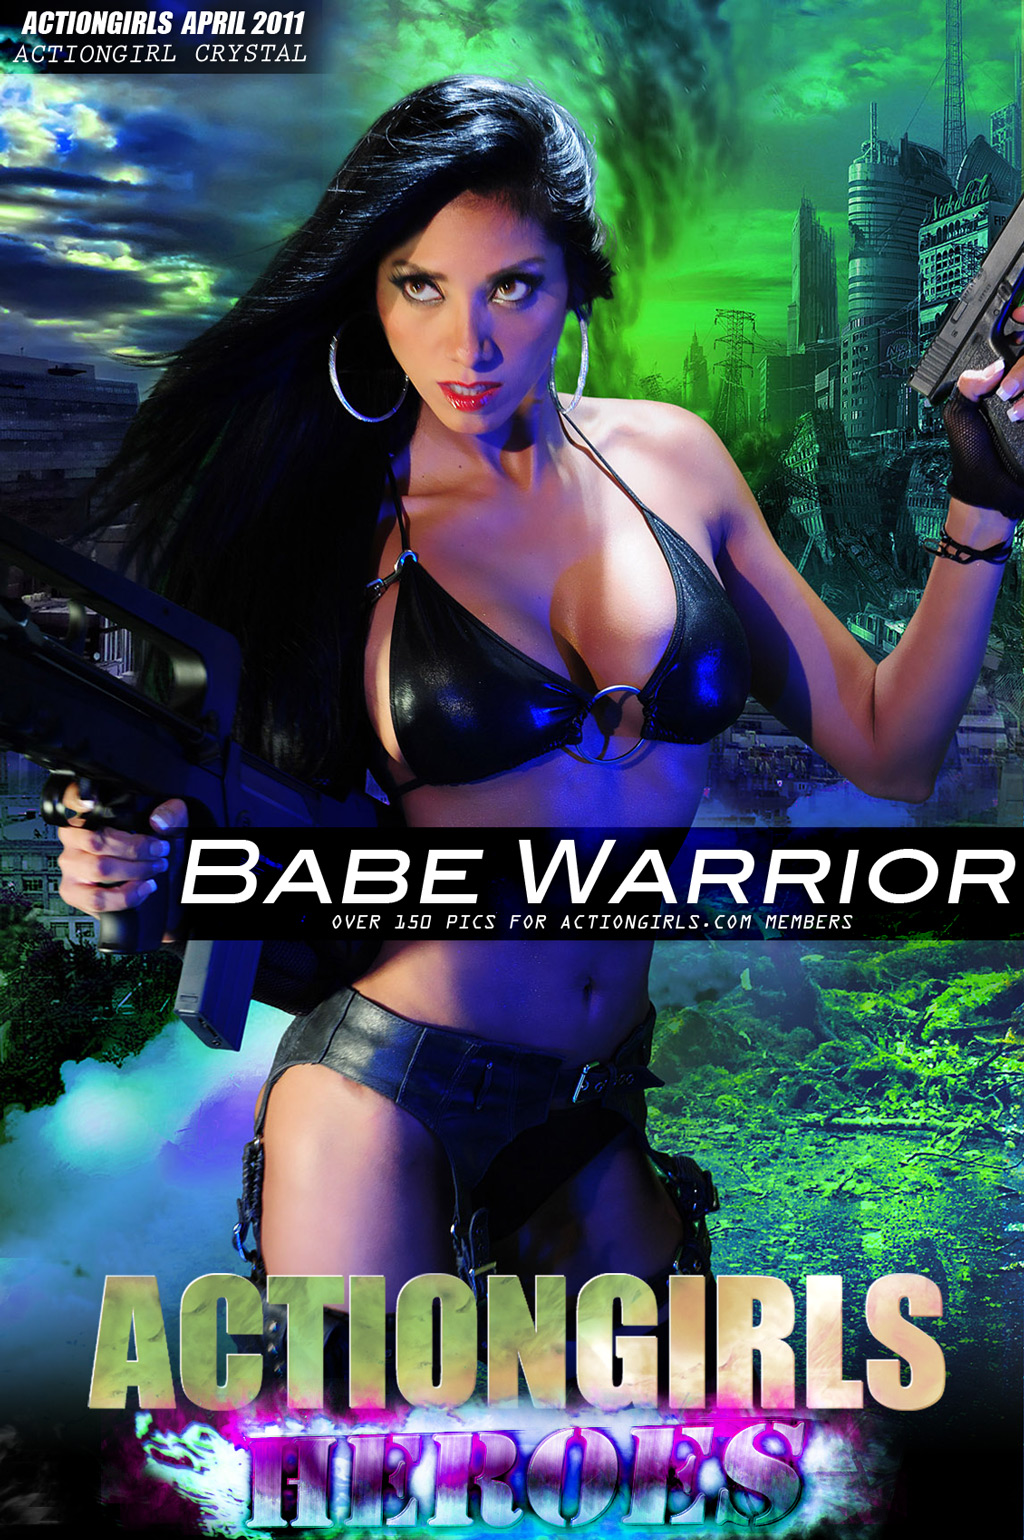 Crystal Babe Warrior